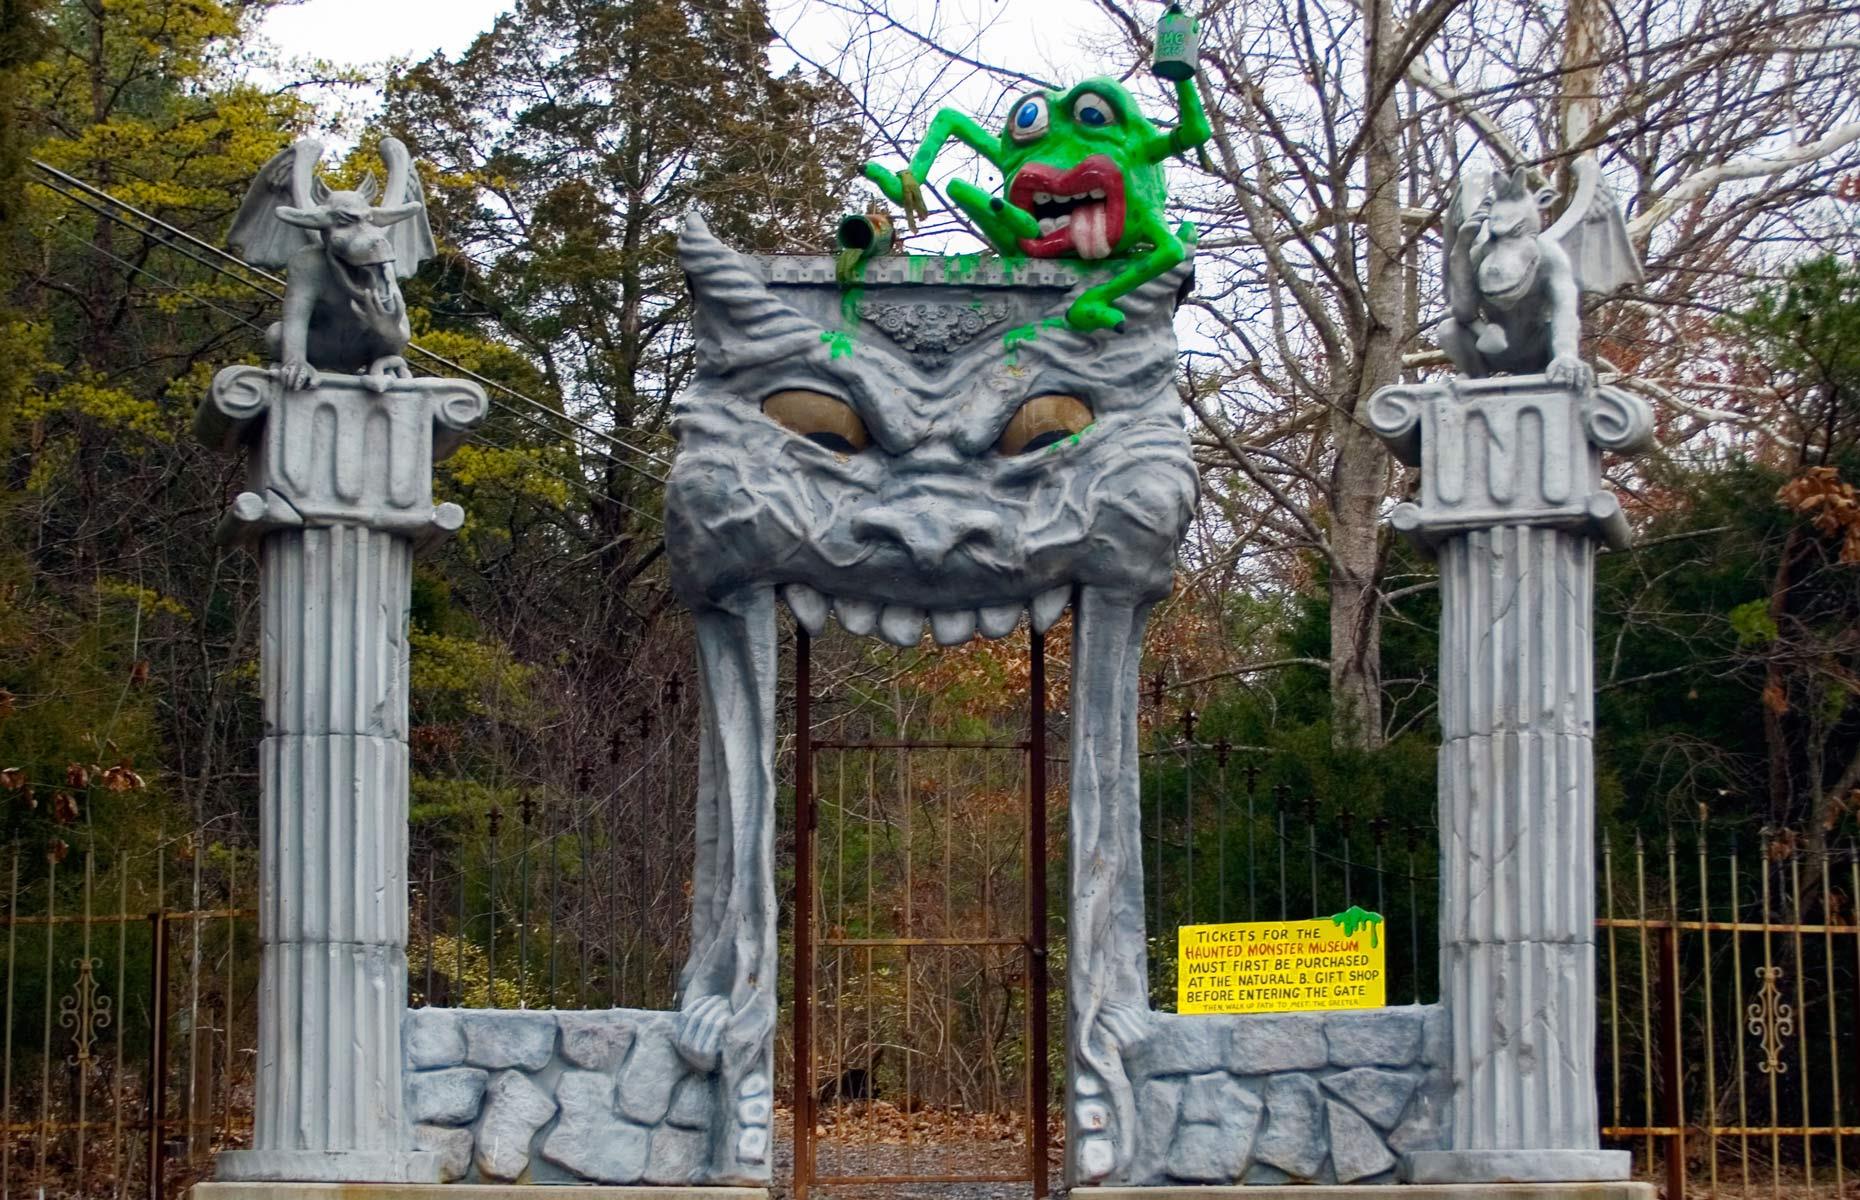 Virginia: Professor Cline's Haunted Monster Museum, Natural Bridge